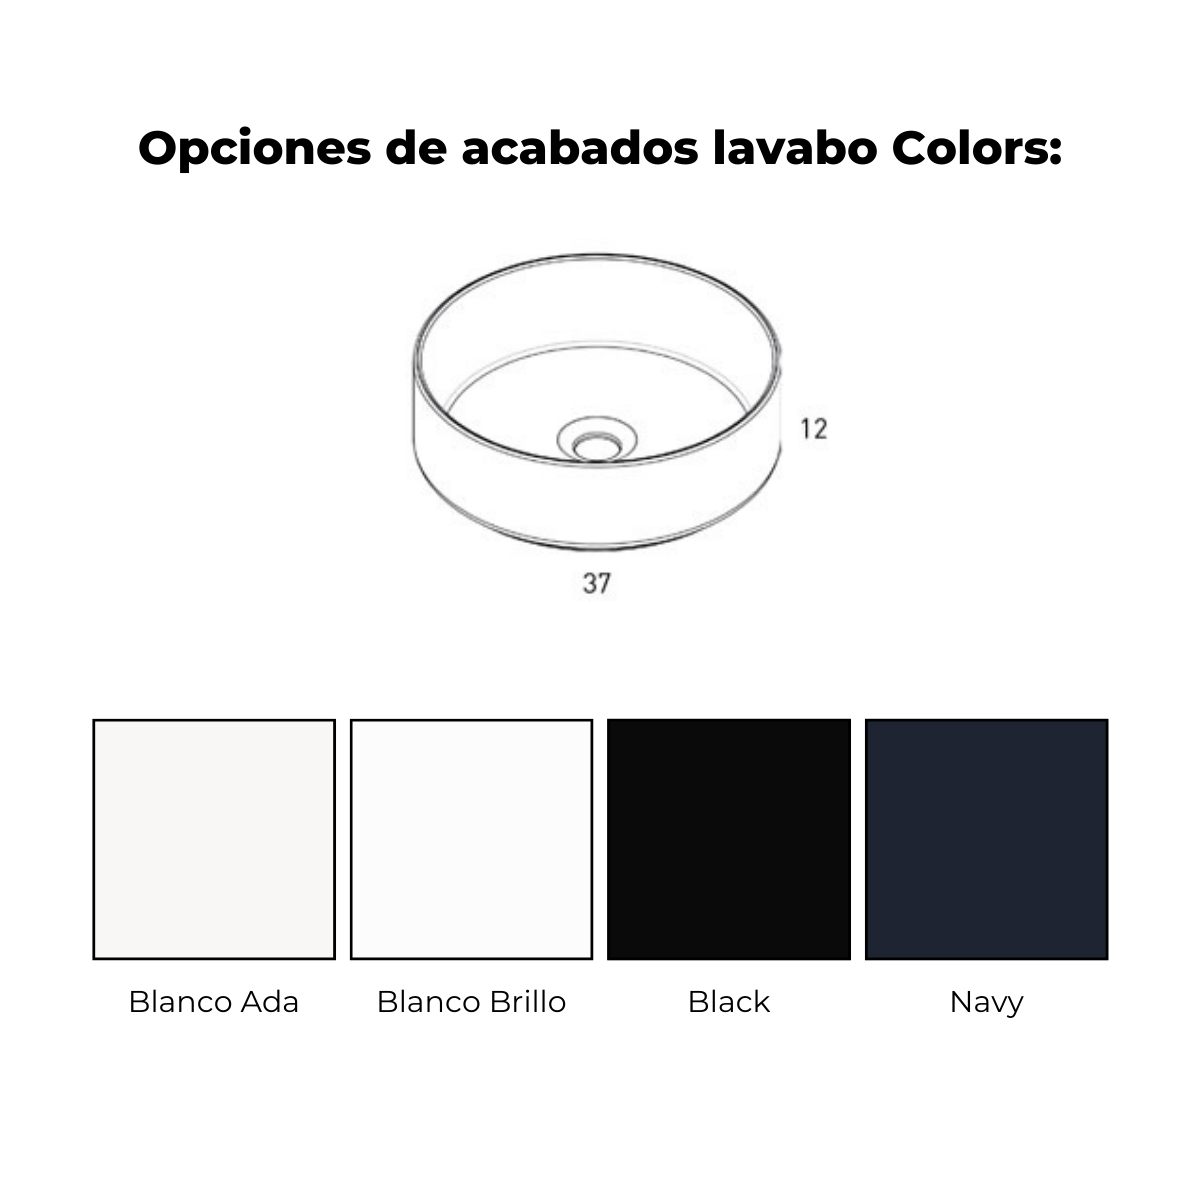 lavabo color navy arco 2c